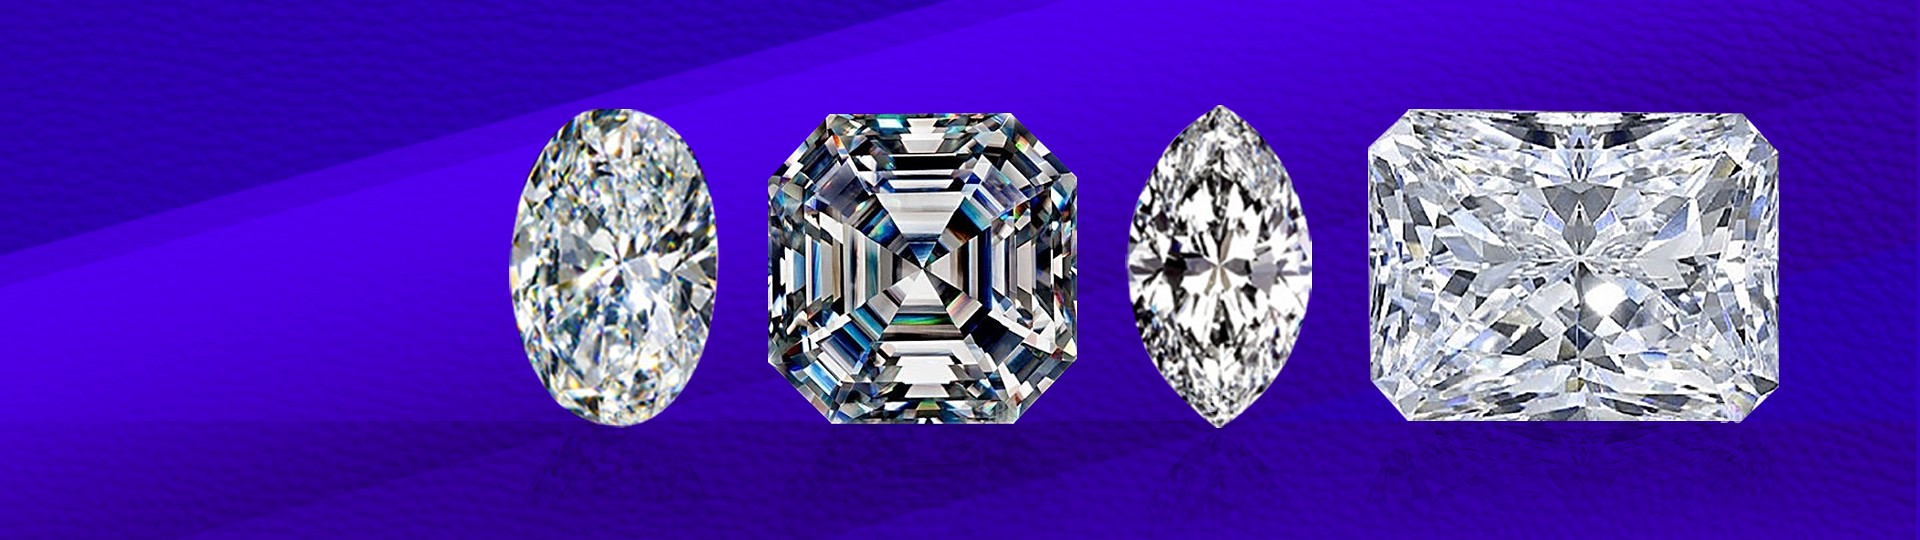 NO RESERVE LOTS - GIA Graded Diamonds | Day 2 by Bid Global International Auctioneers LLC